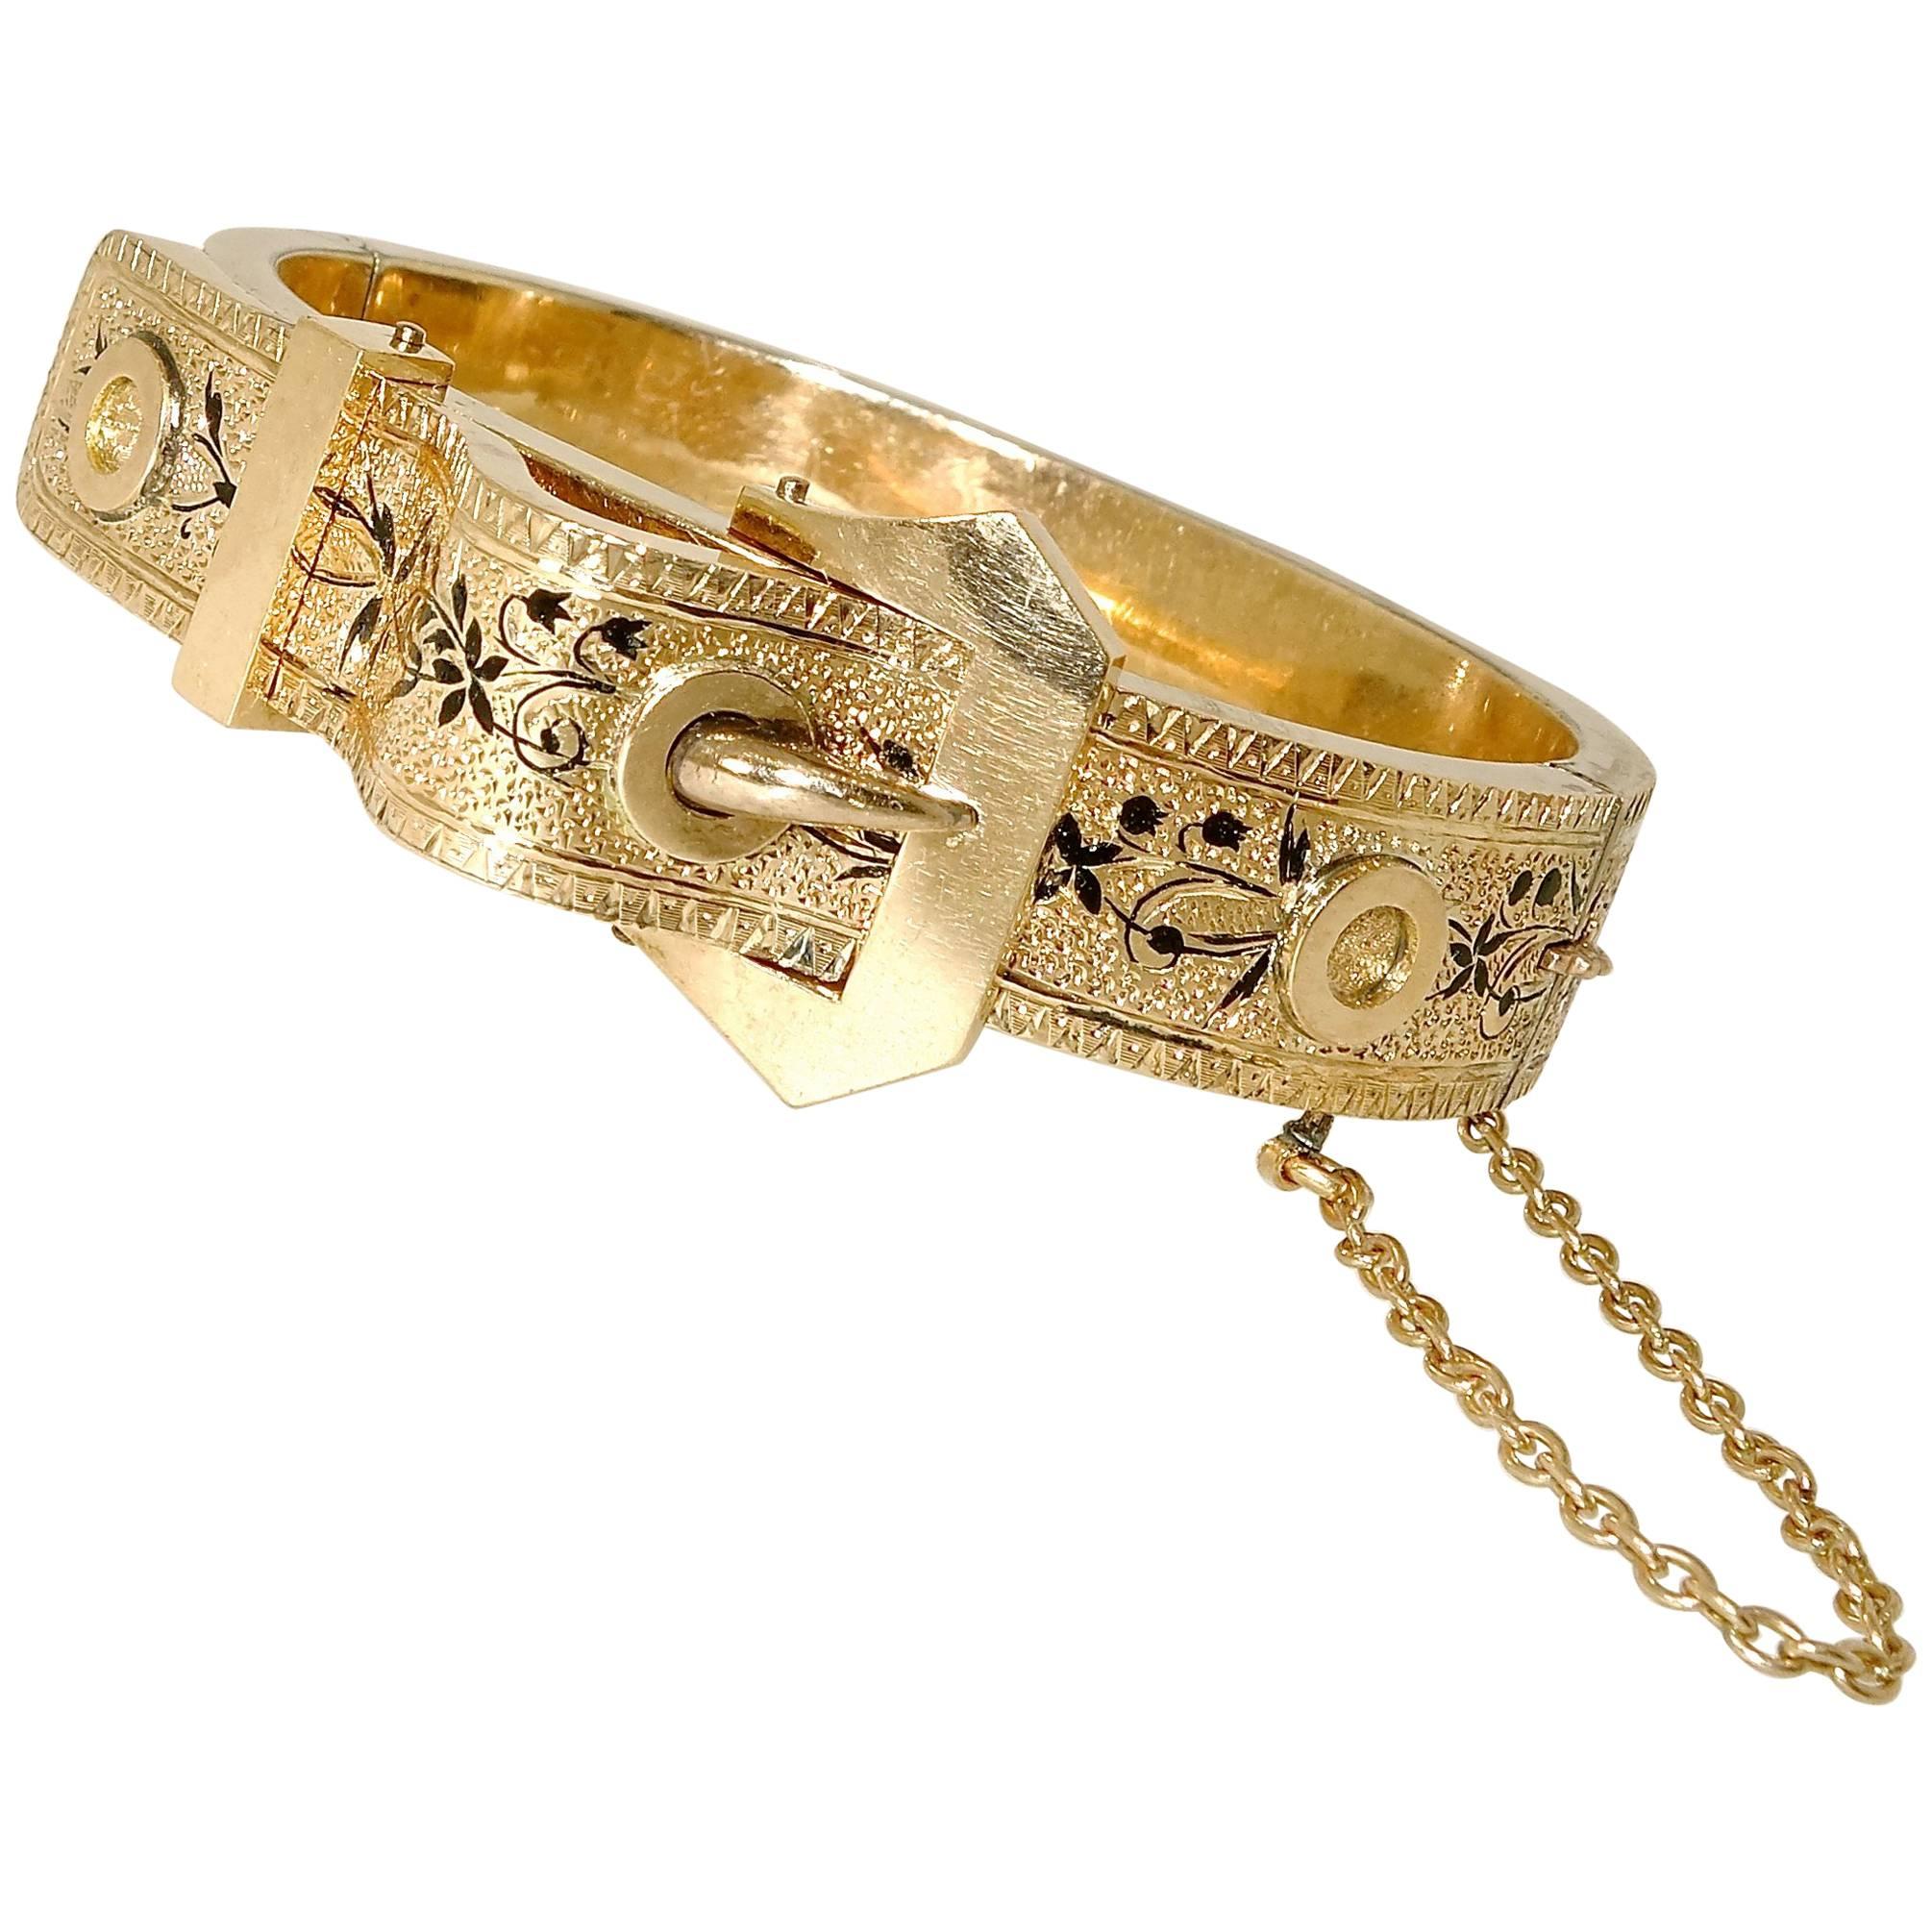 Victorian Gold and Enamel Bangle Bracelet, circa 1875